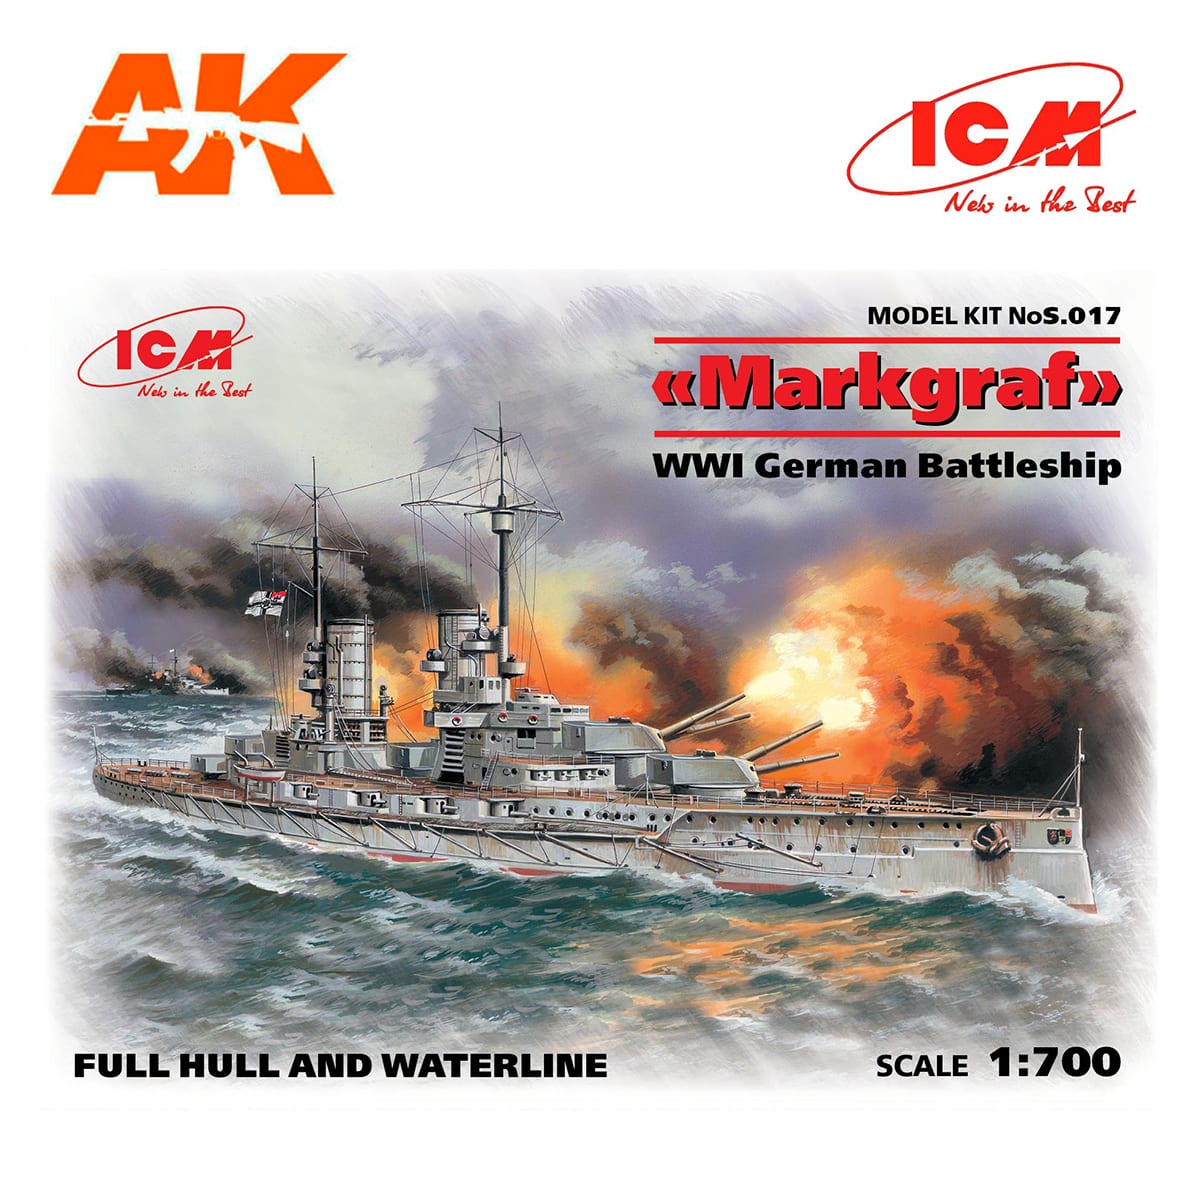 Markgraf (full hull & waterline), WWI German Battleship 1/700